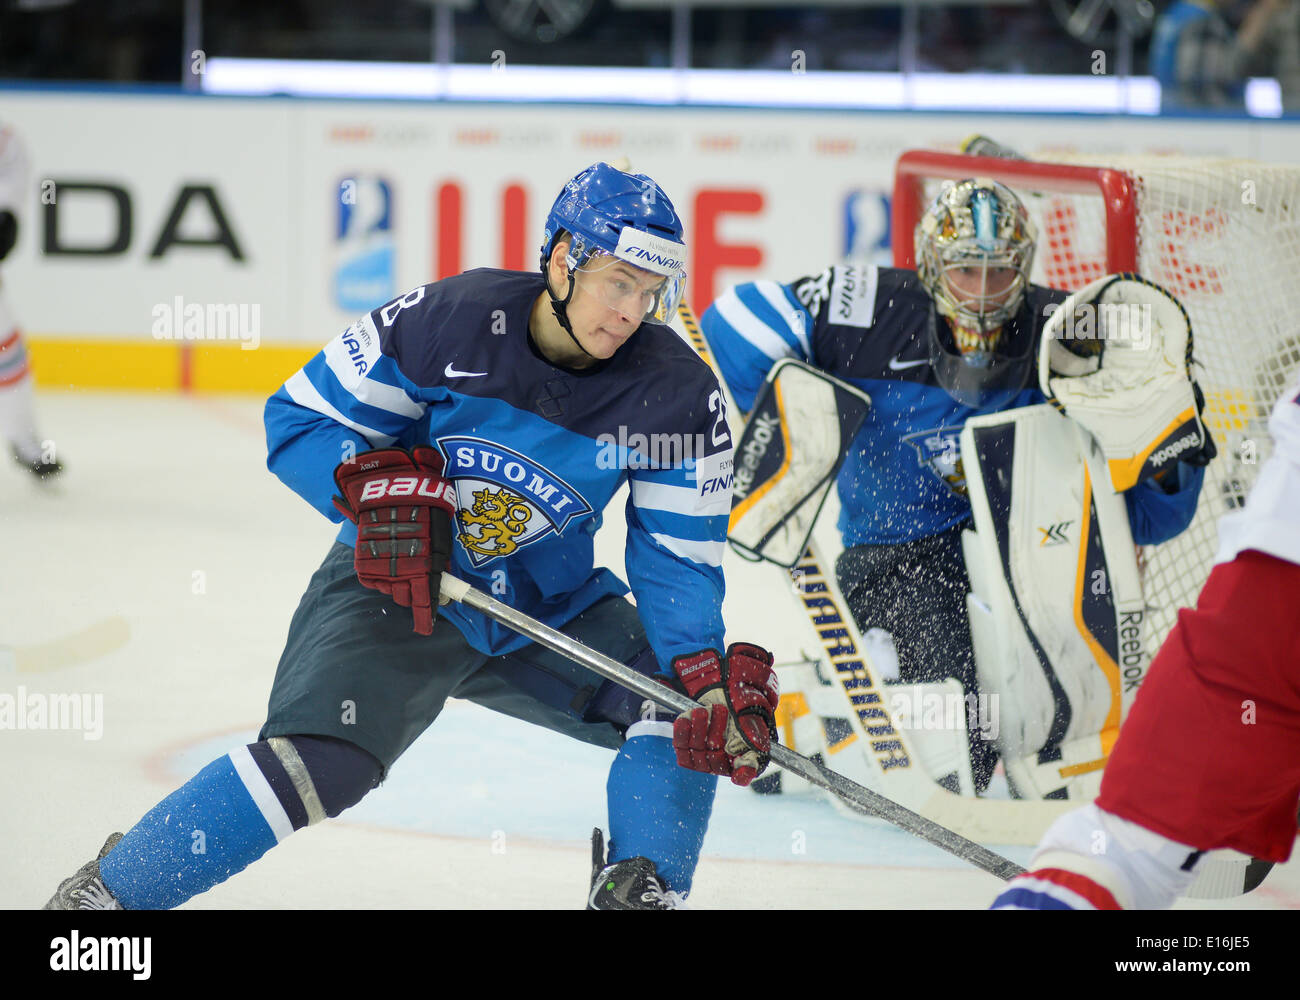 MARTTINEN Jyri (28) of Finland skates up the ice during 2014 IIHF World Ice Hockey Championship semifinal match at Minsk Arena Stock Photo